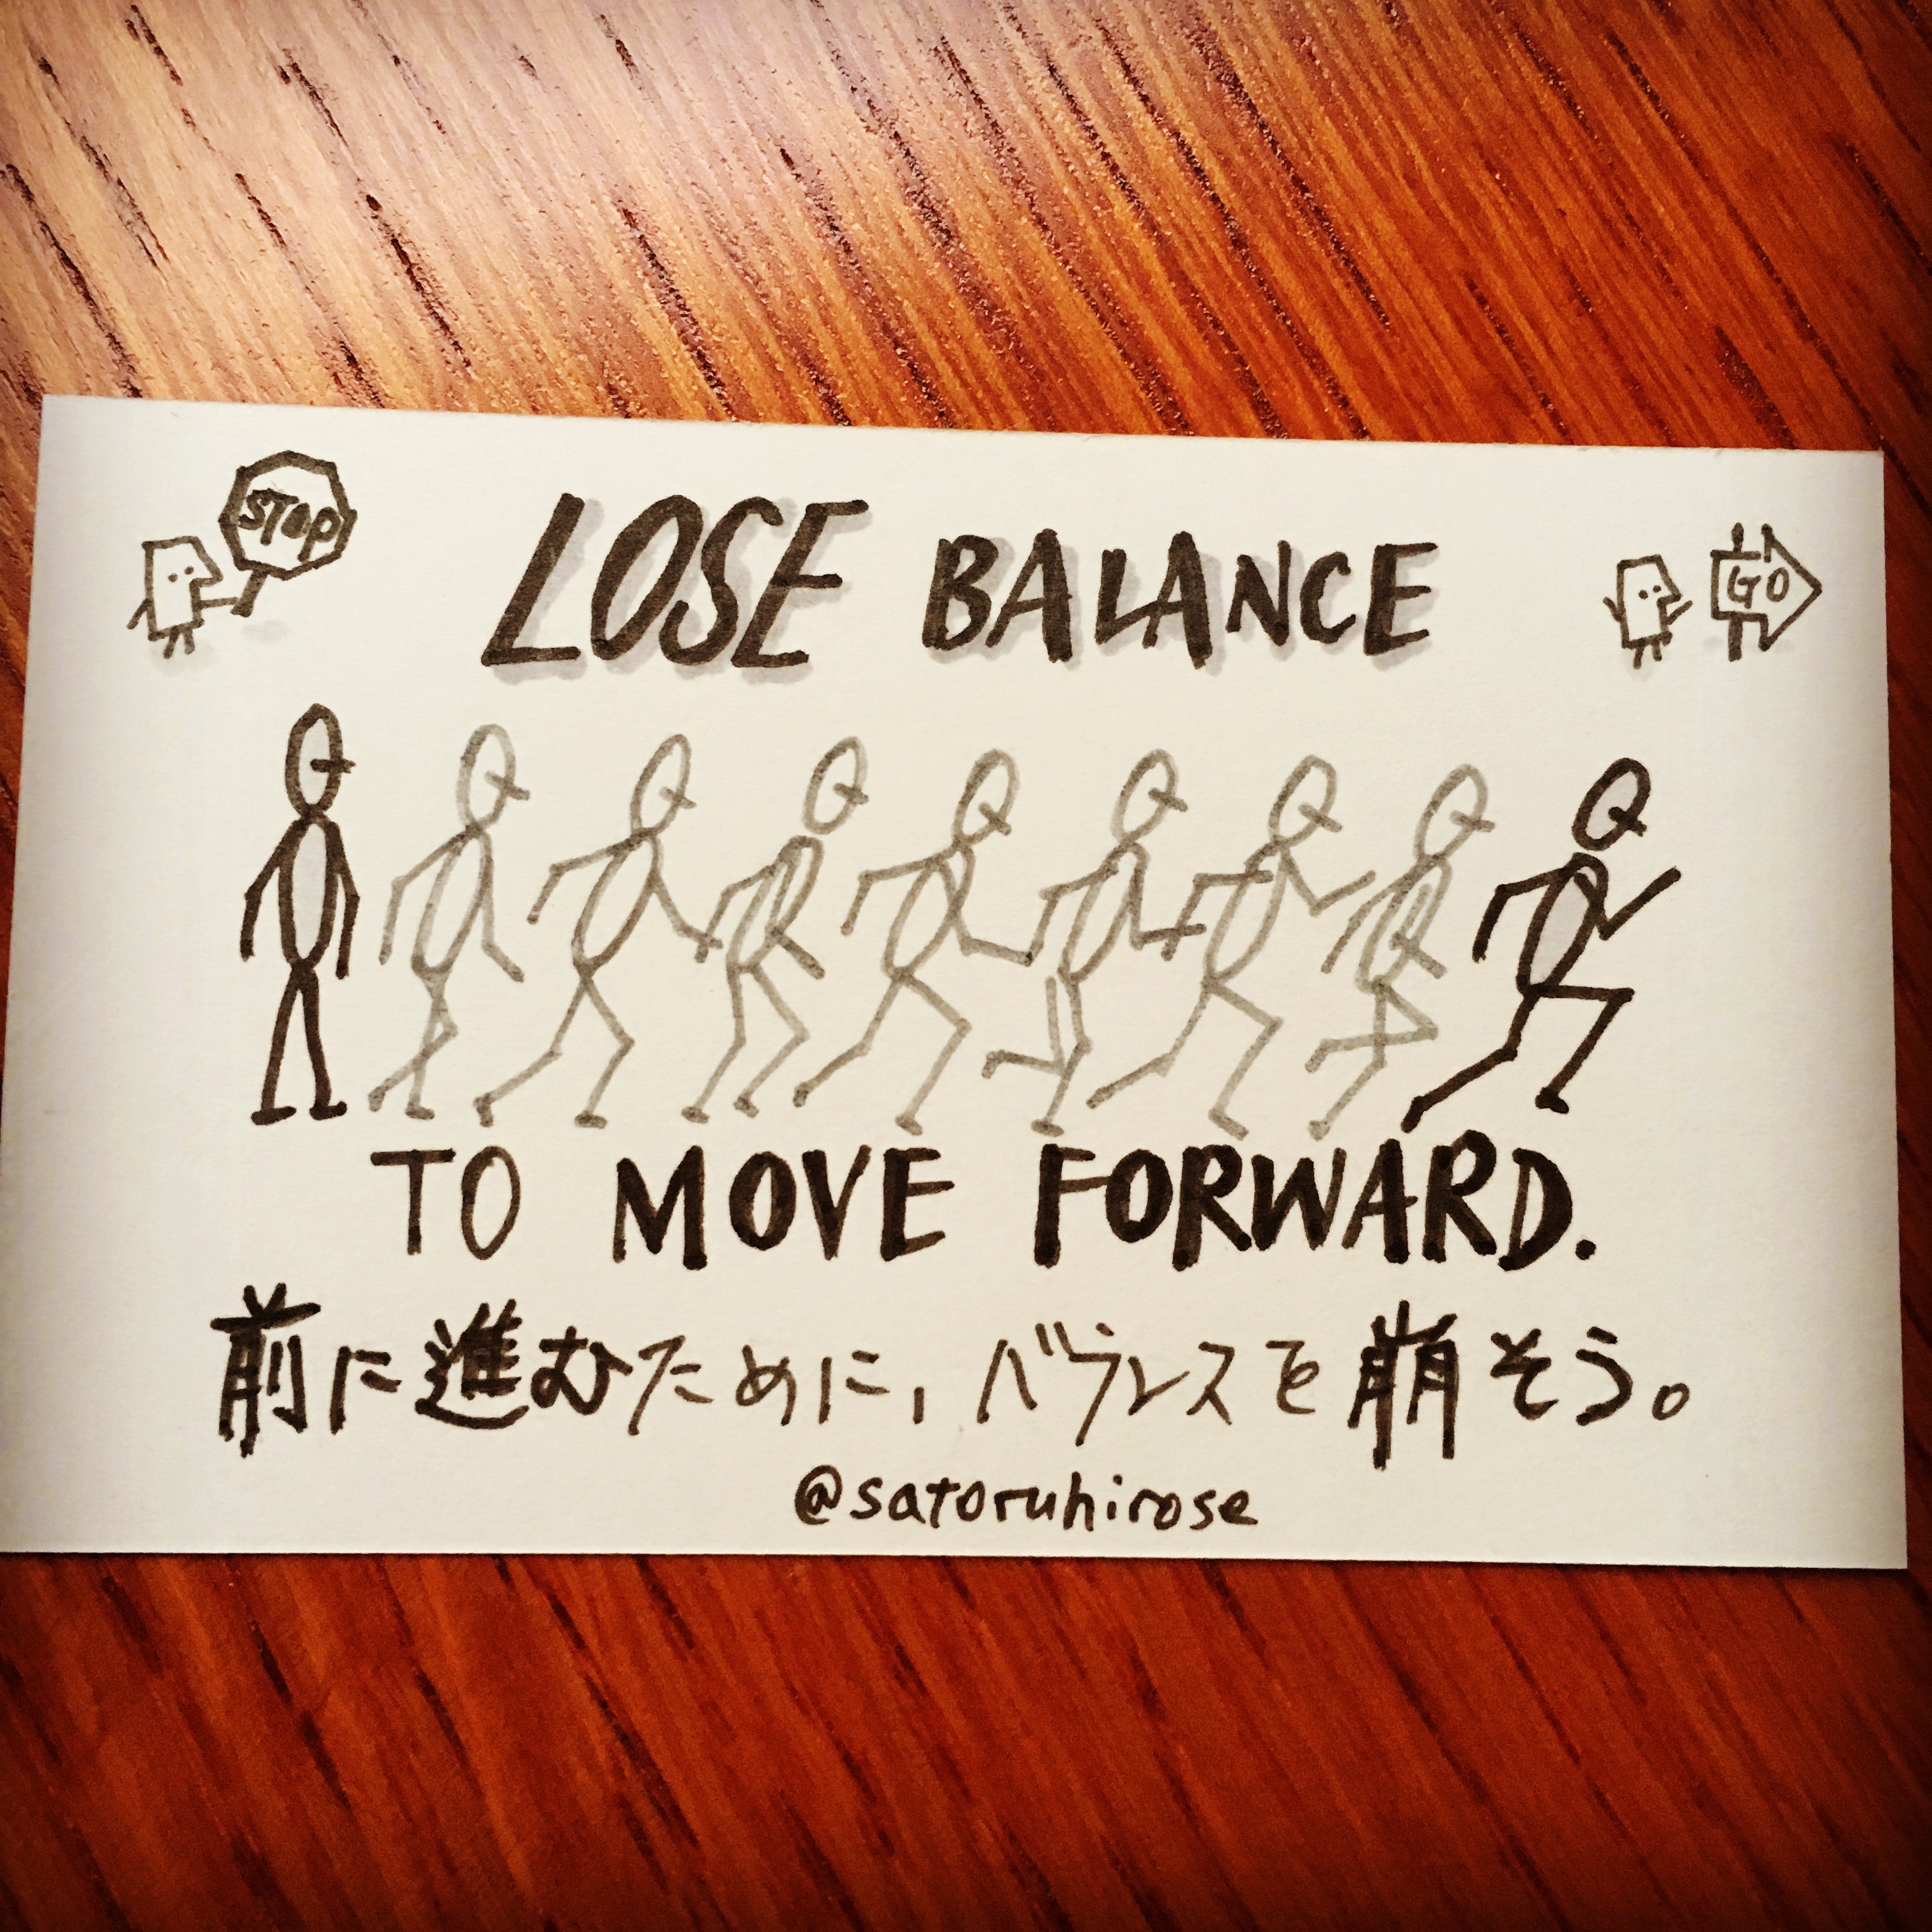 Lose balance to move forward.